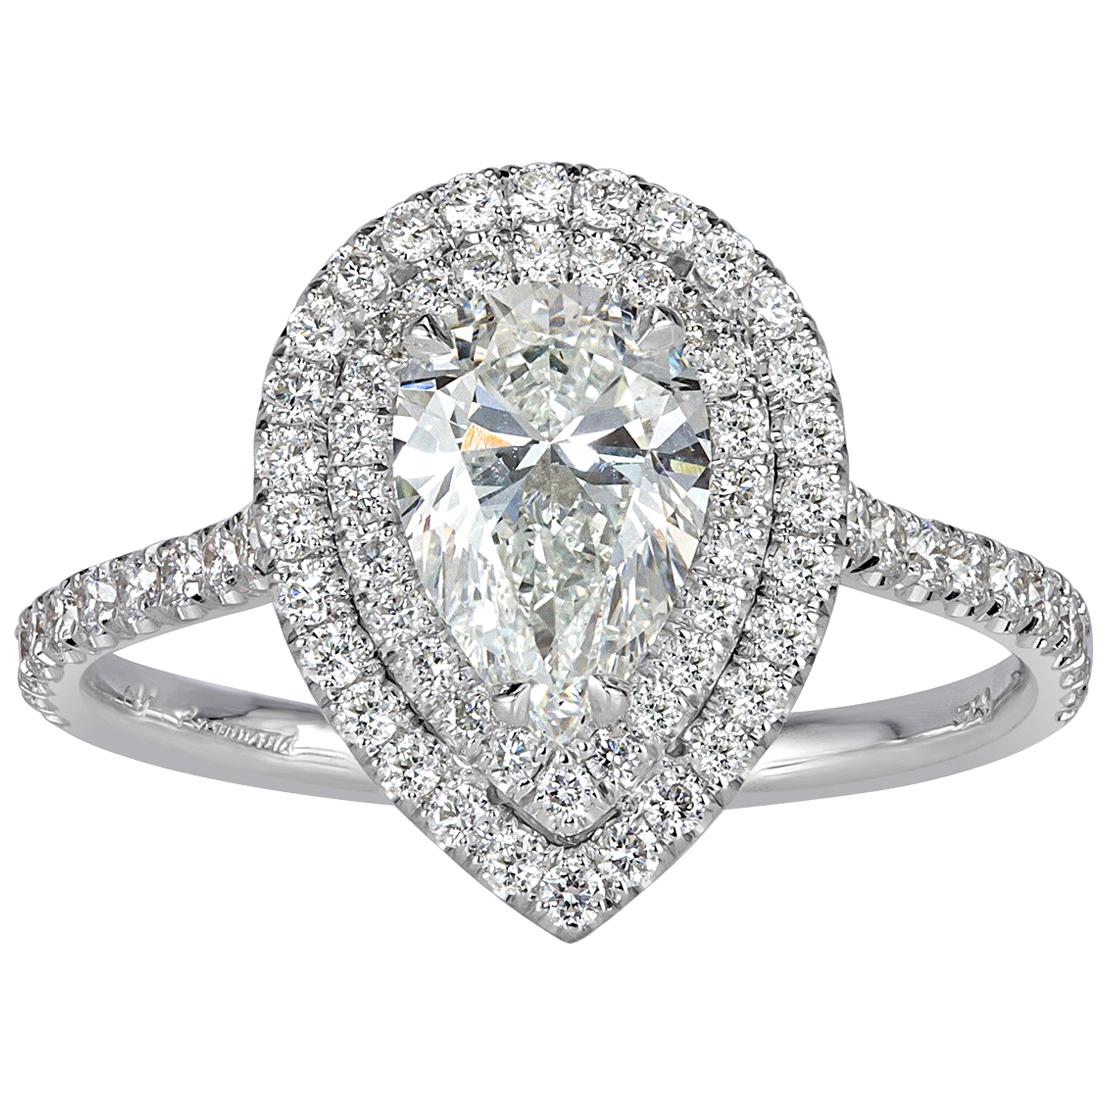 Mark Broumand 1.62 Carat Pear Shaped Diamond Engagement Ring